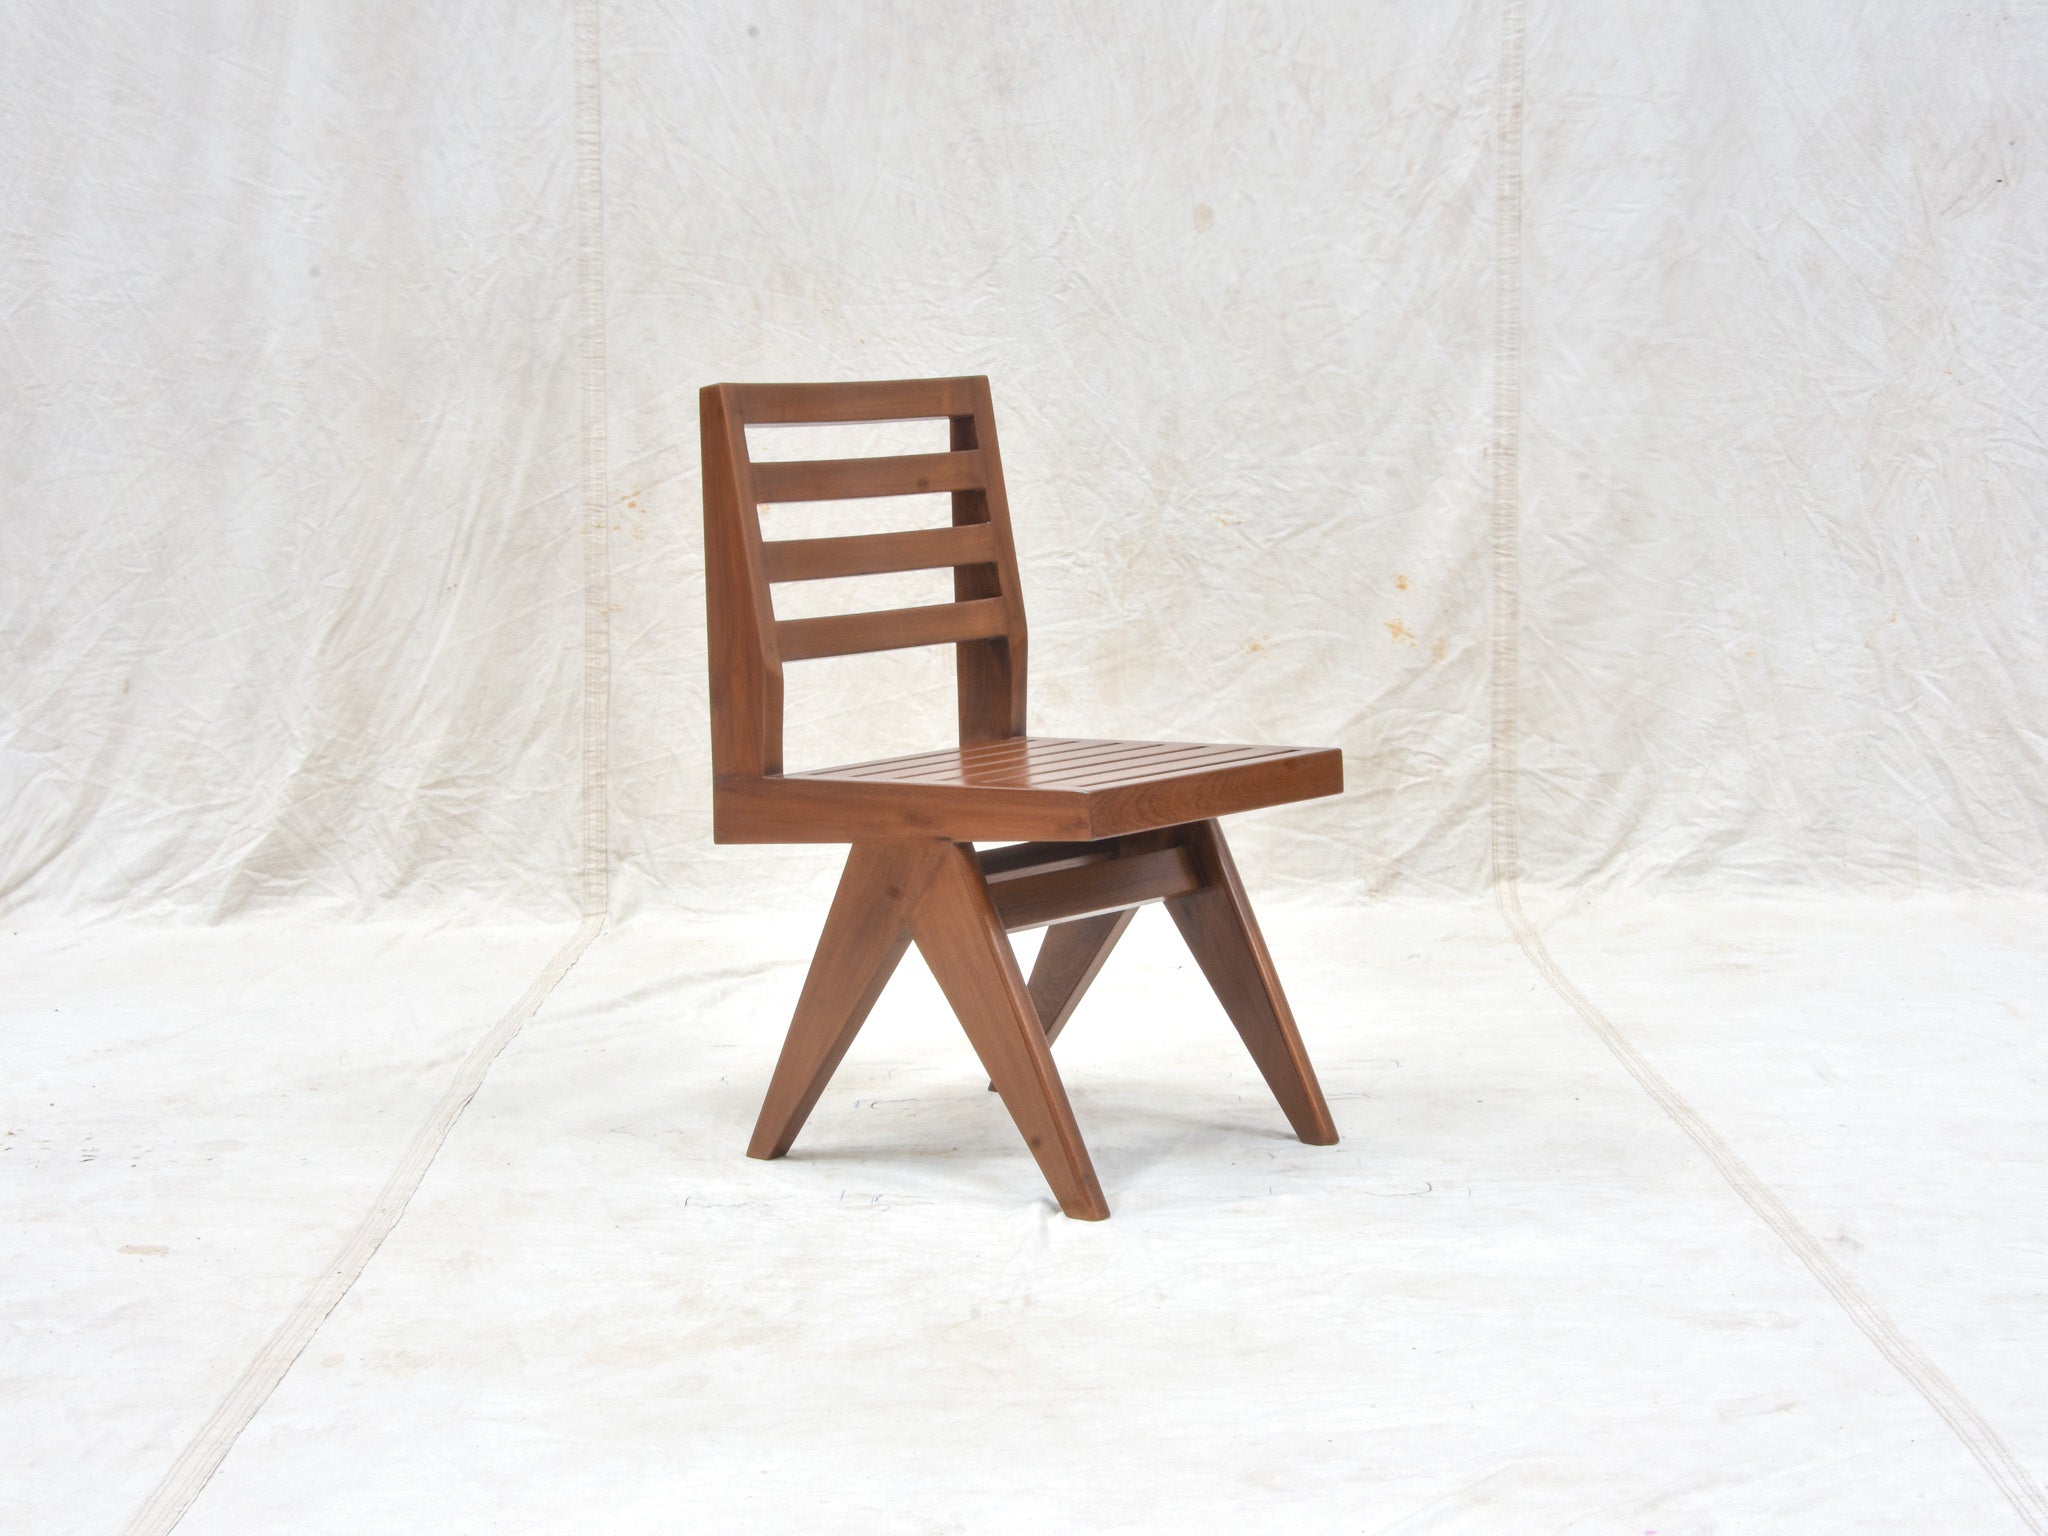 Pierre Jeanneret Slatted Student Chair-outdoor teak furniture-1